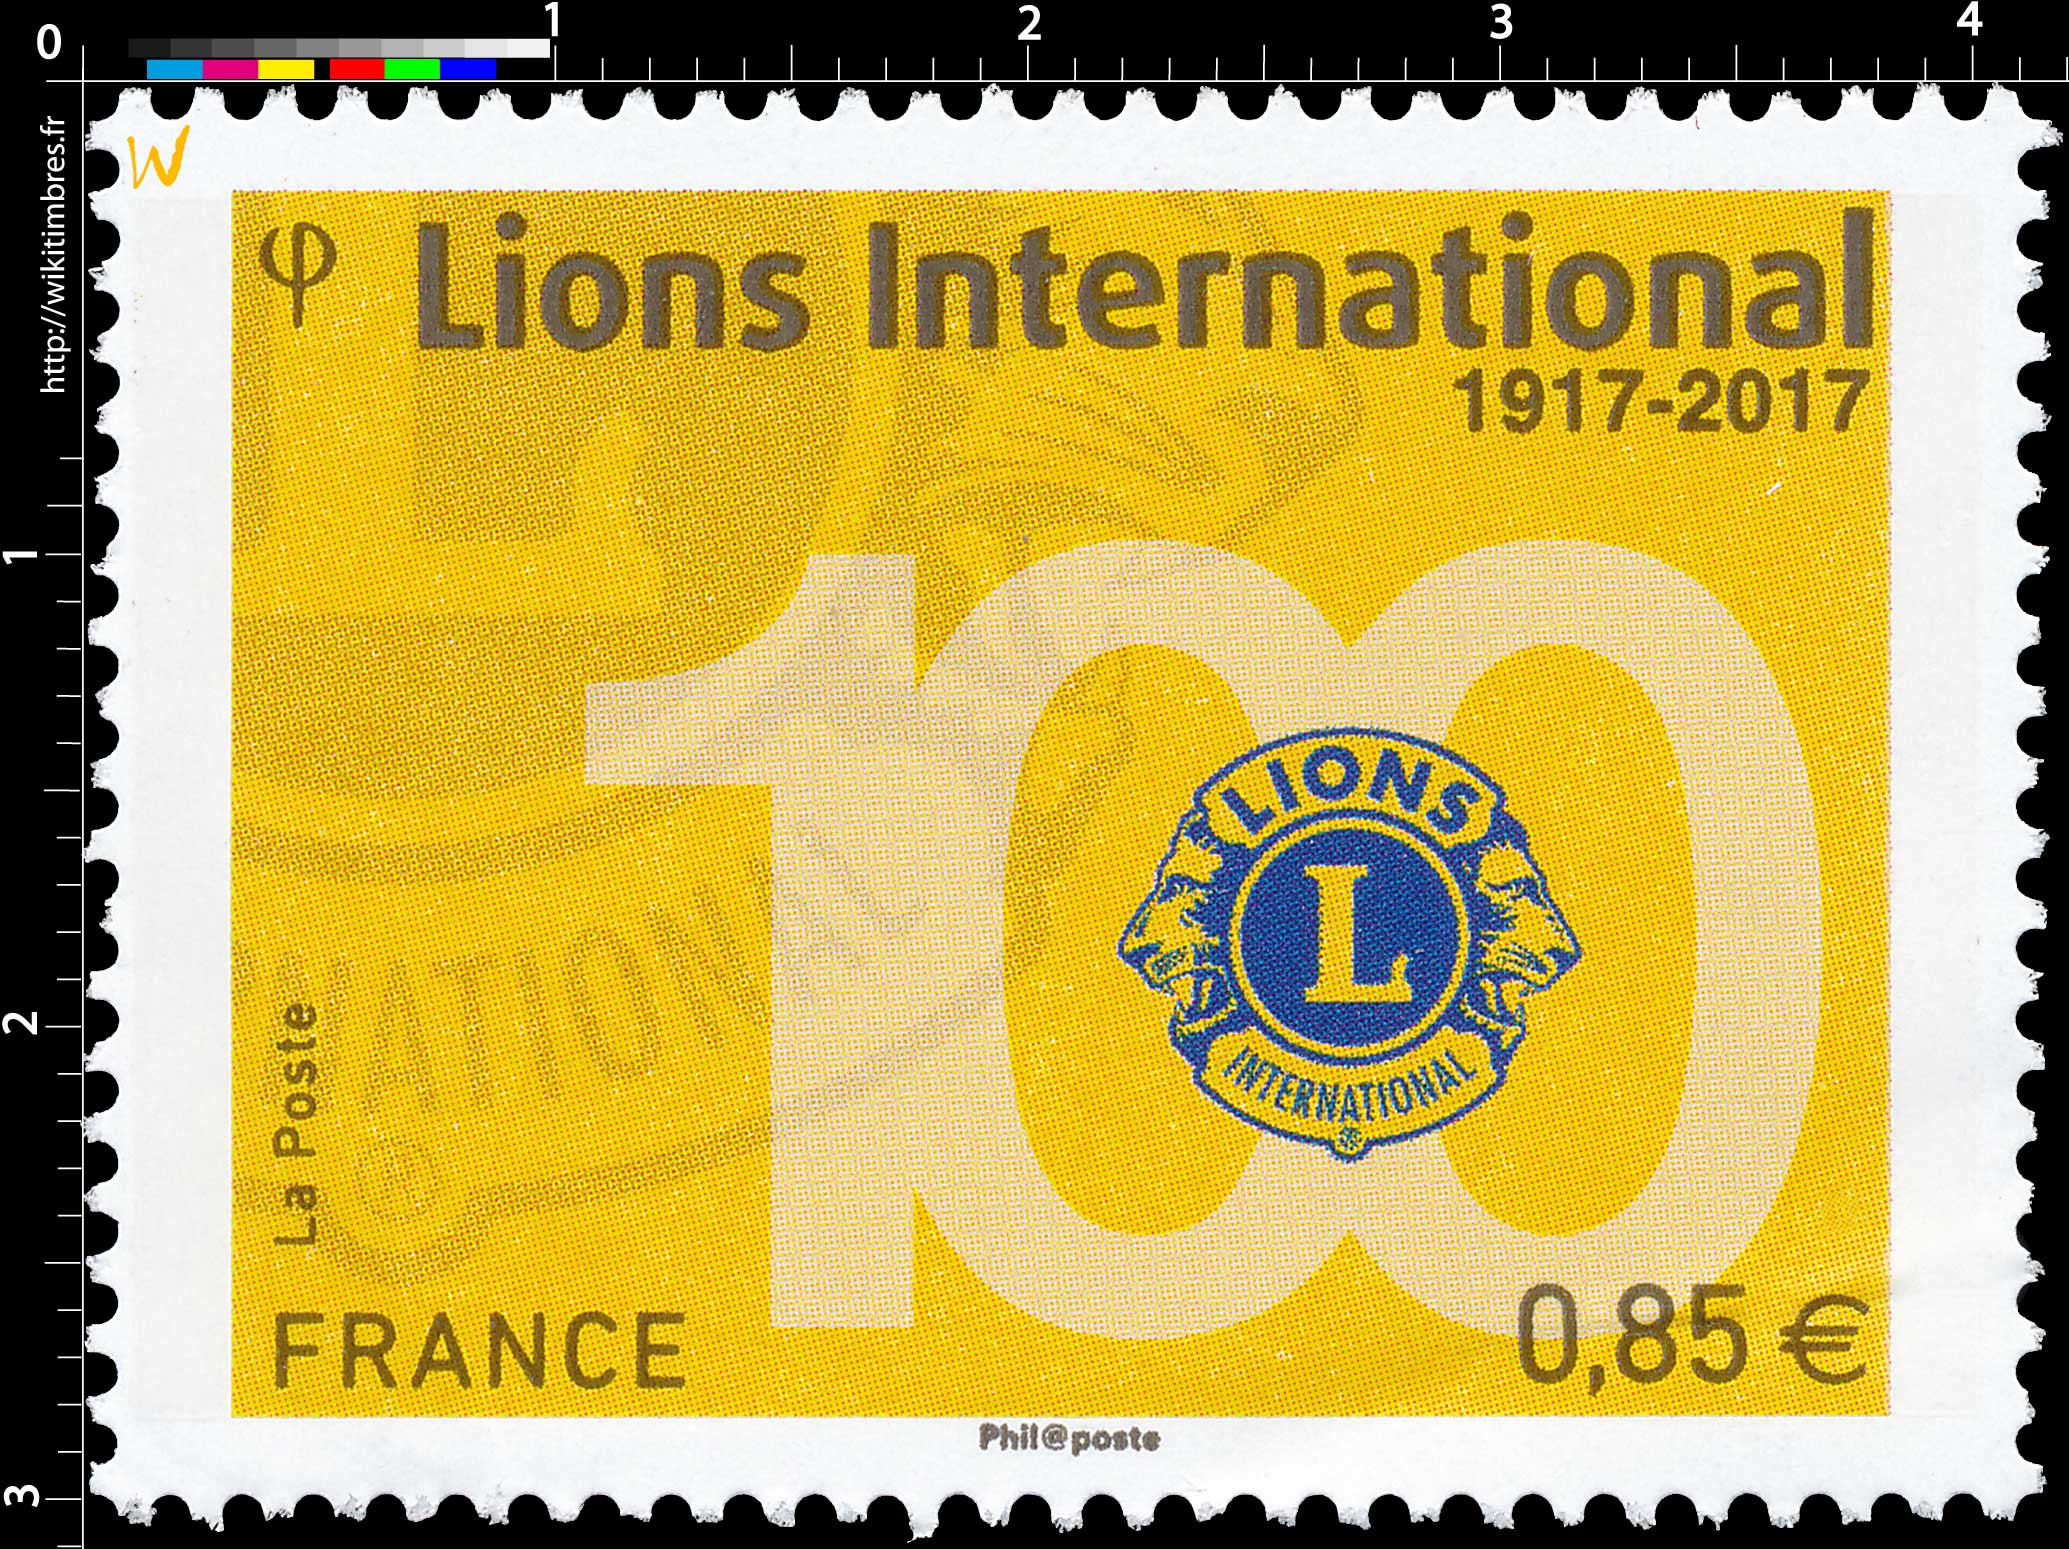 2017 Lions International 1917-2017